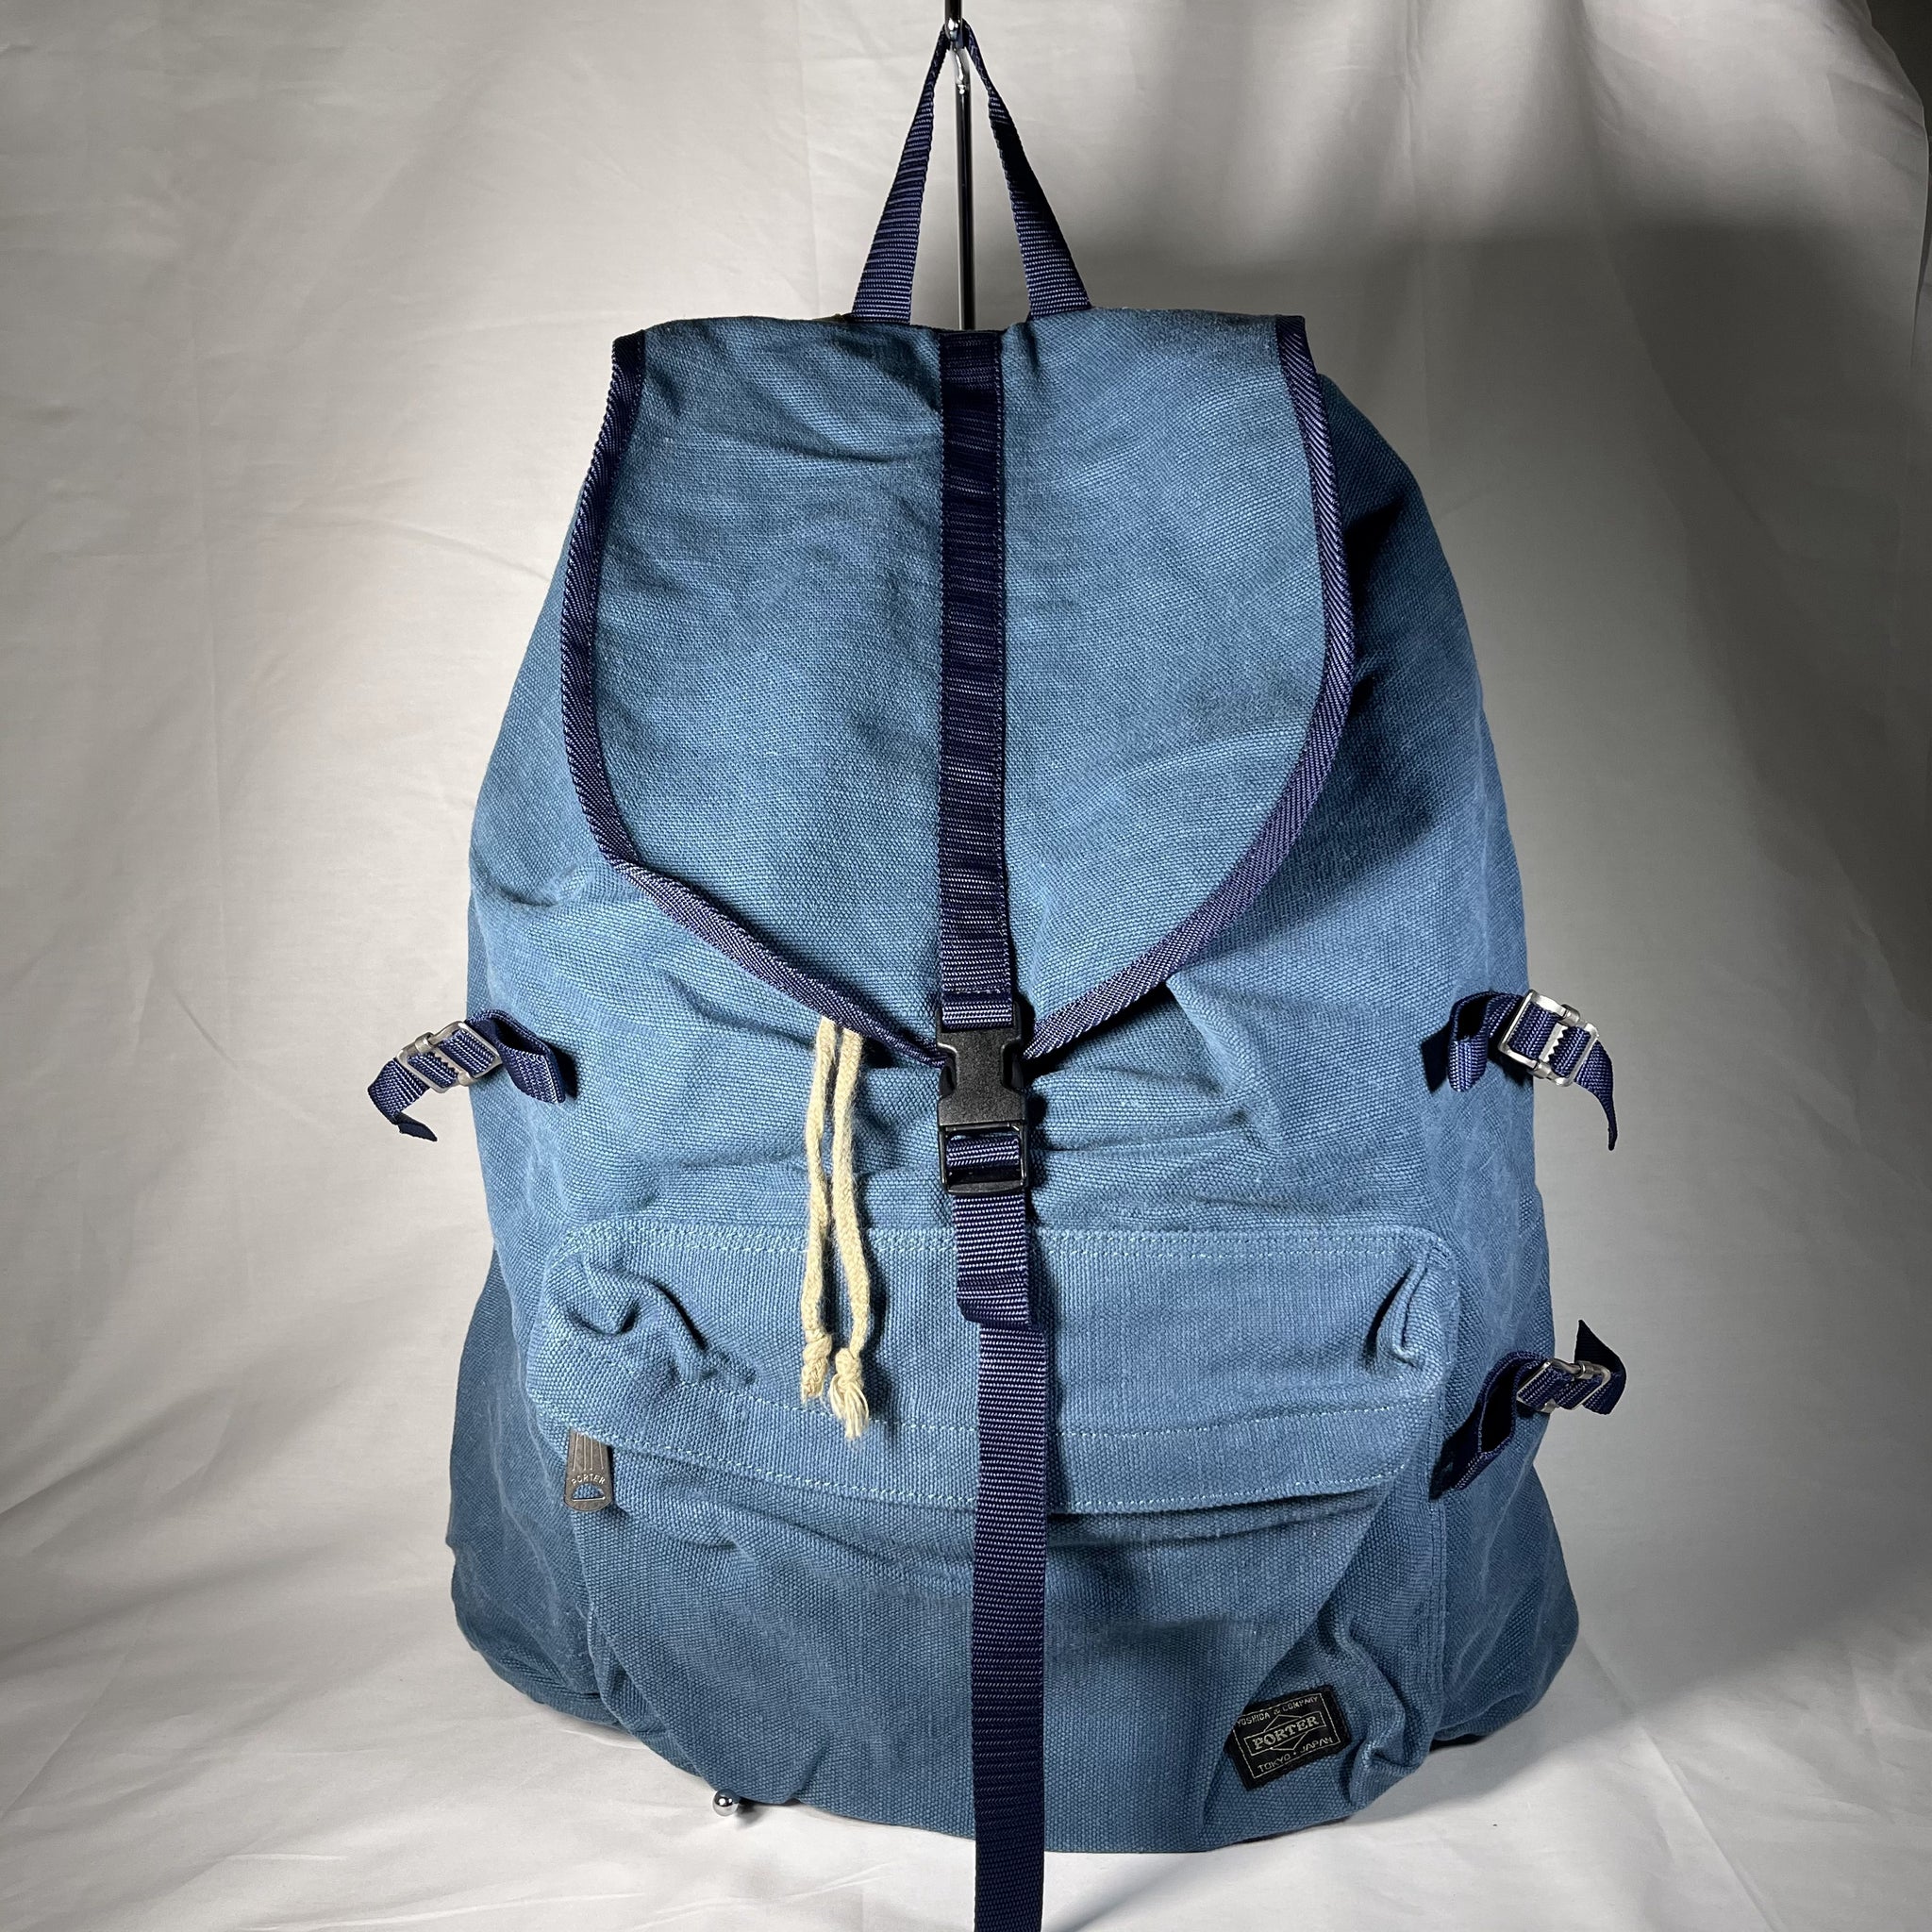 Porter x b印 Fennica Fabric Drawsting Backpack - Blue 藍色布製索繩背囊